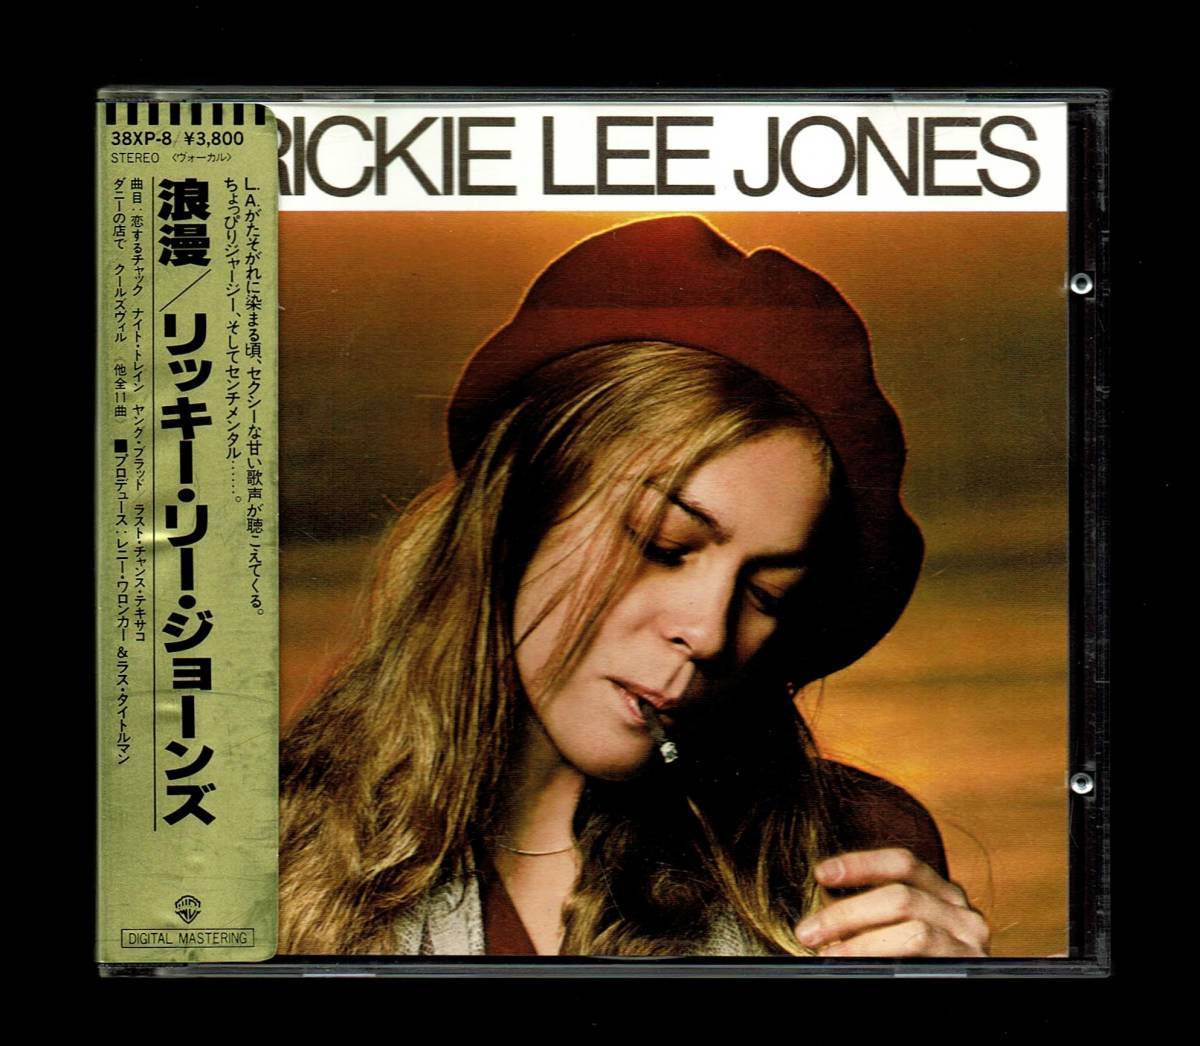 【38XP-8/西独盤/金シール帯】リッキー リー ジョーンズ/浪漫 ターゲットレーベル Rickie Lee Jones West Germany Taget Label